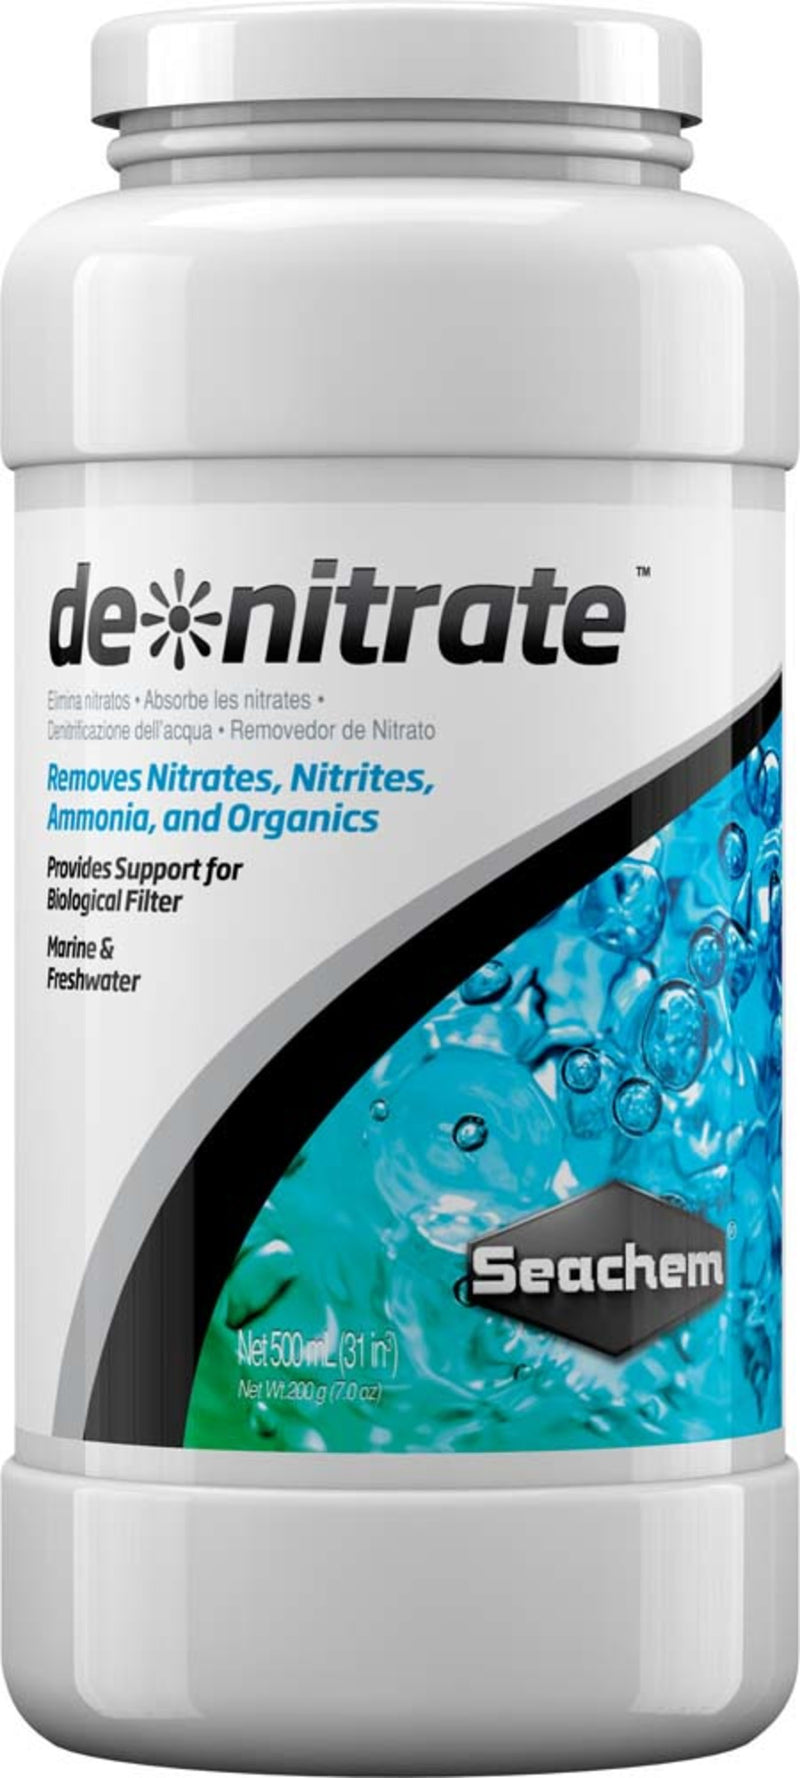 Seachem de nitrate Nitrate Remover